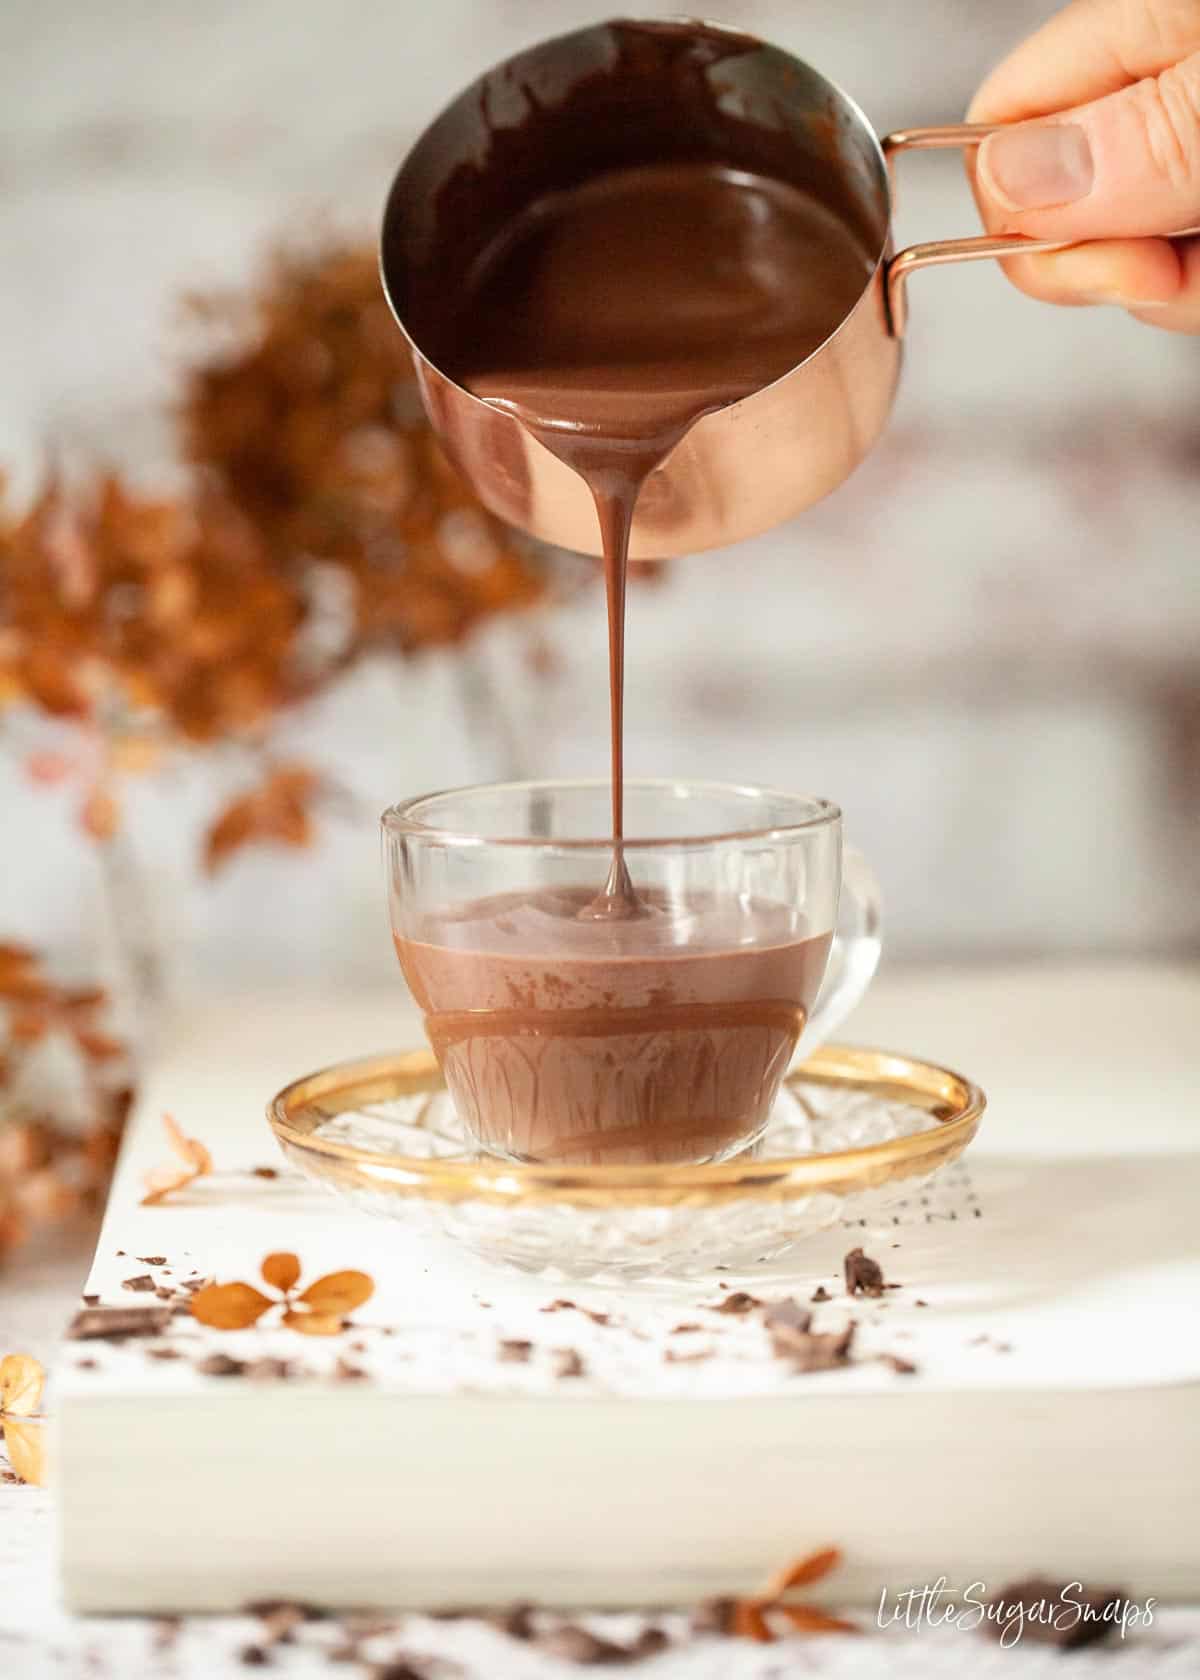 Italian cioccolata calda being poured into a glass cup